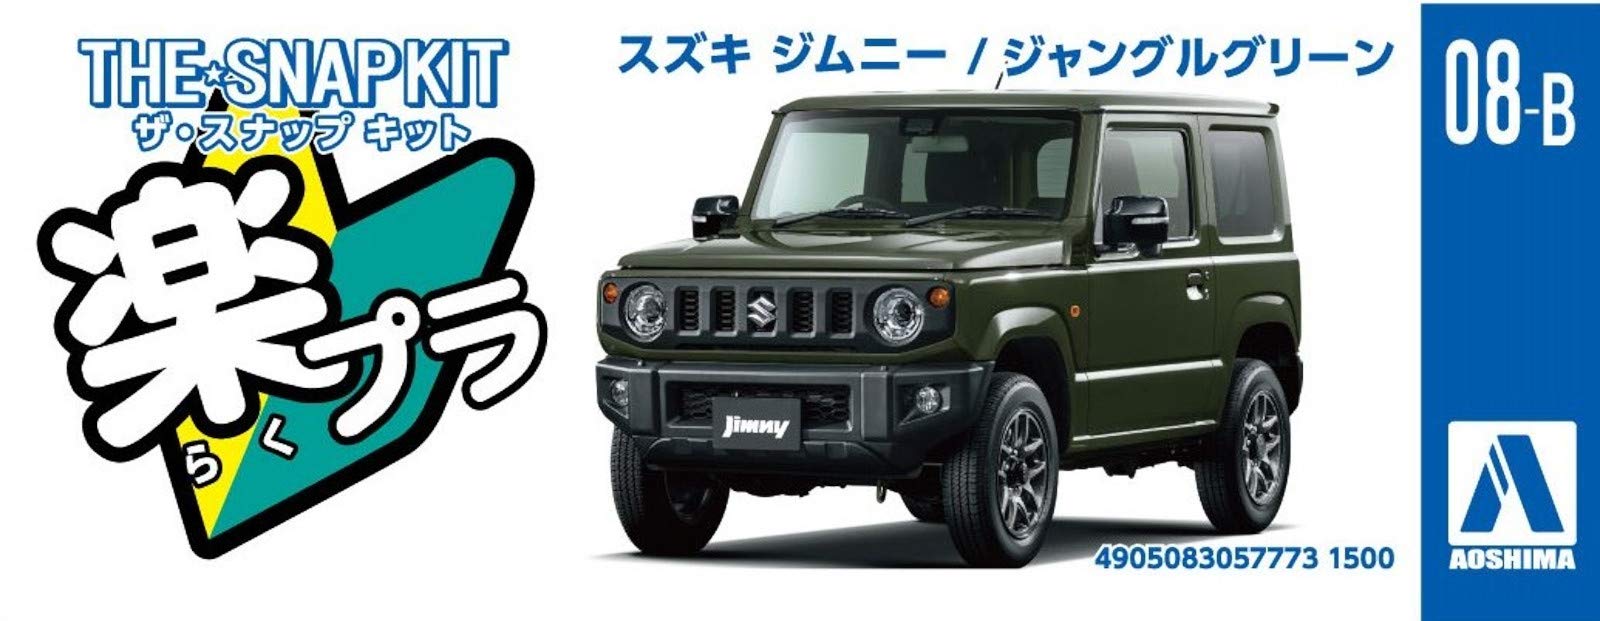 AOSHIMA 57773 08-B Suzuki Jimny Jungle Green 1/32 Scale Pre-Painted Snap-Fit Kit